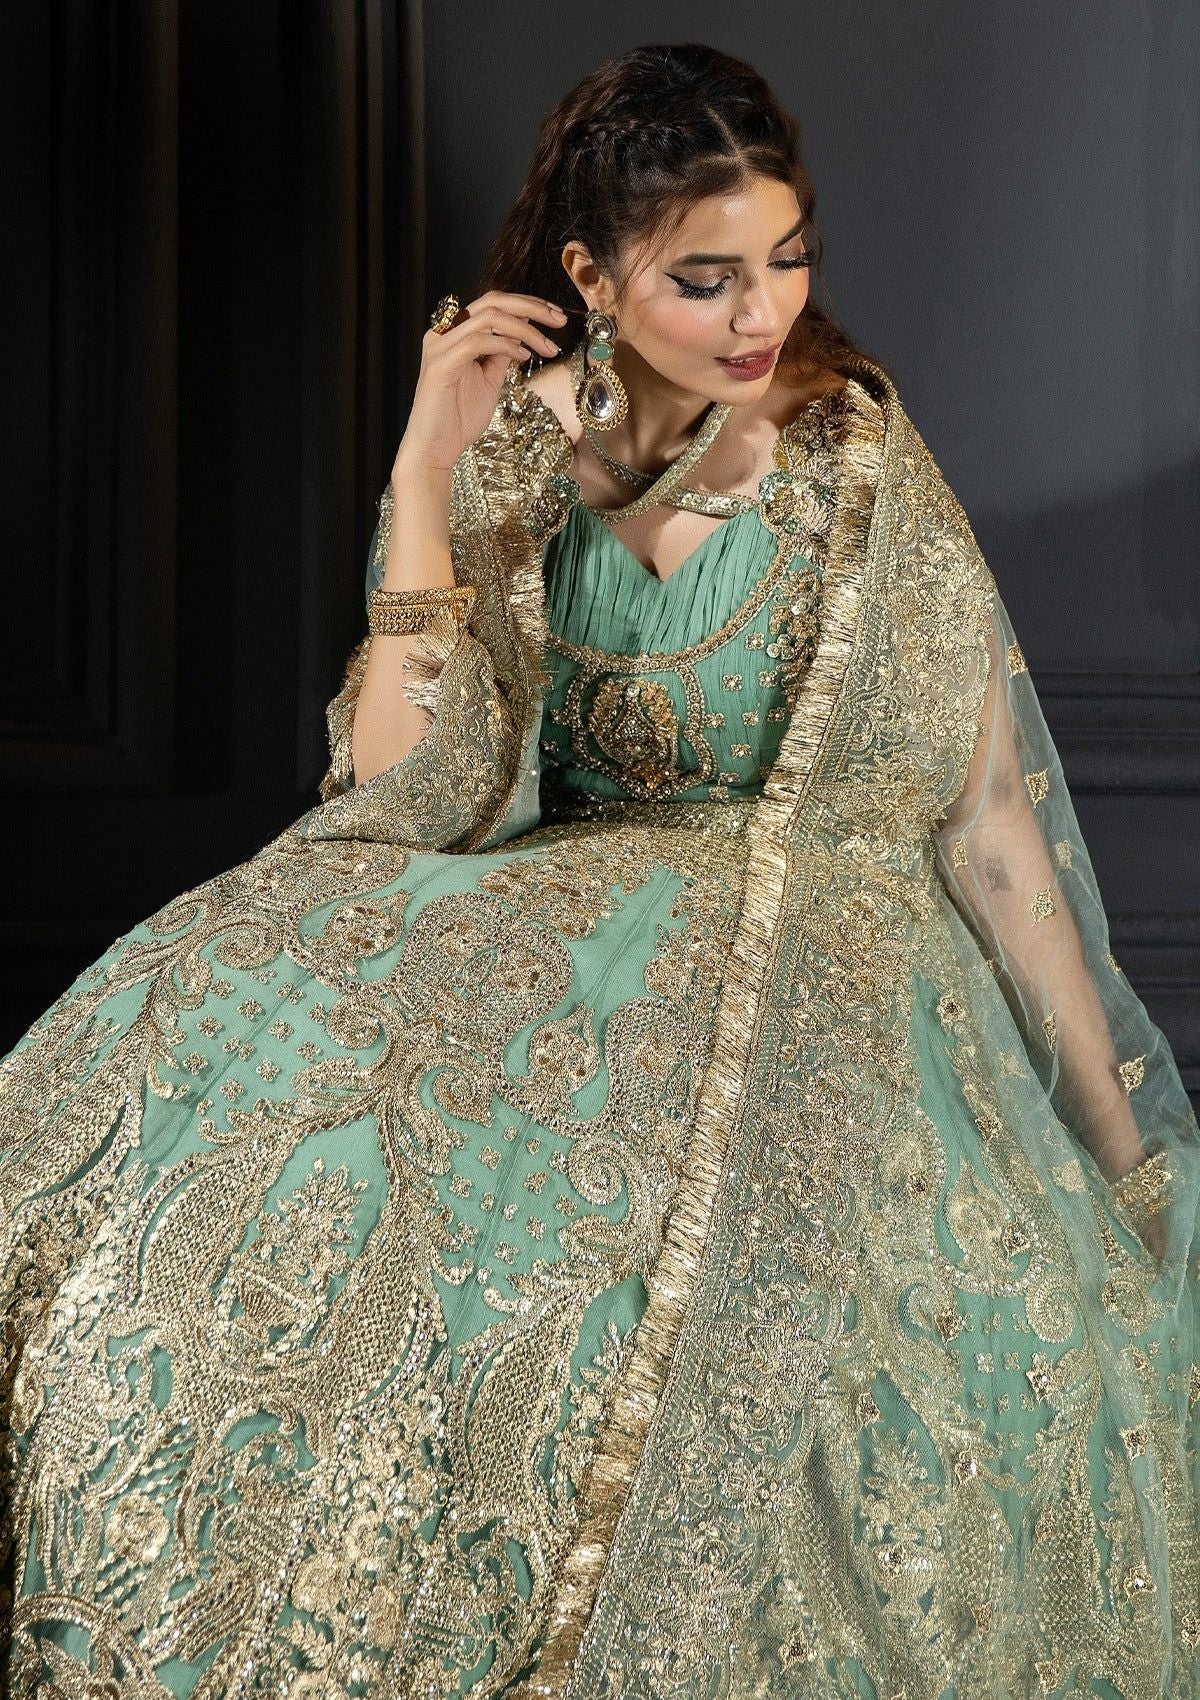 Formal Collection - Imrozia - Andaaz-E-Khaas - Bridal - IB#45 - Unaysa